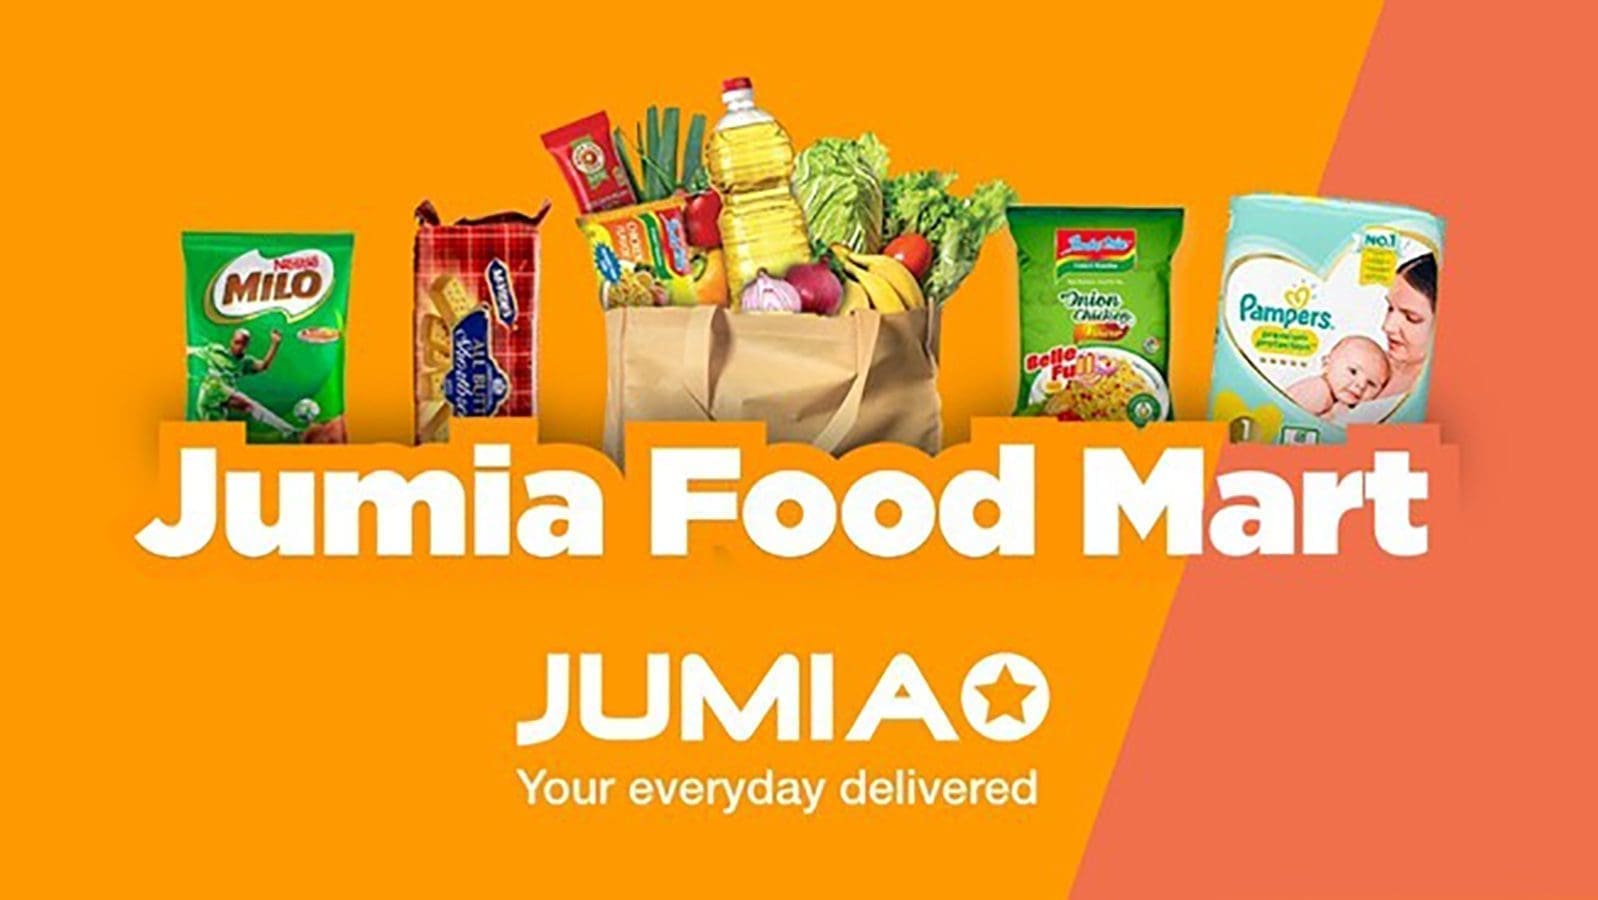 Jumia introduces new quick commerce platform Jumia Food Mart in Nigeria